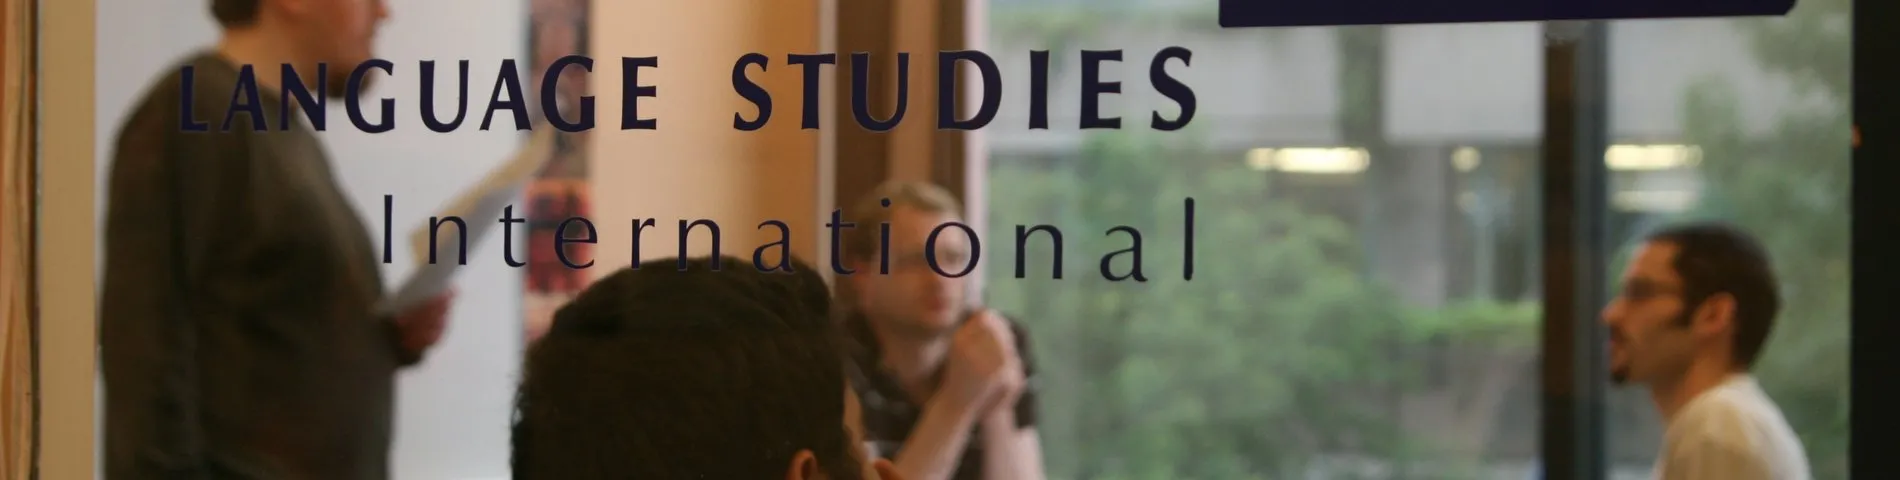 LSI - Language Studies International resim 1